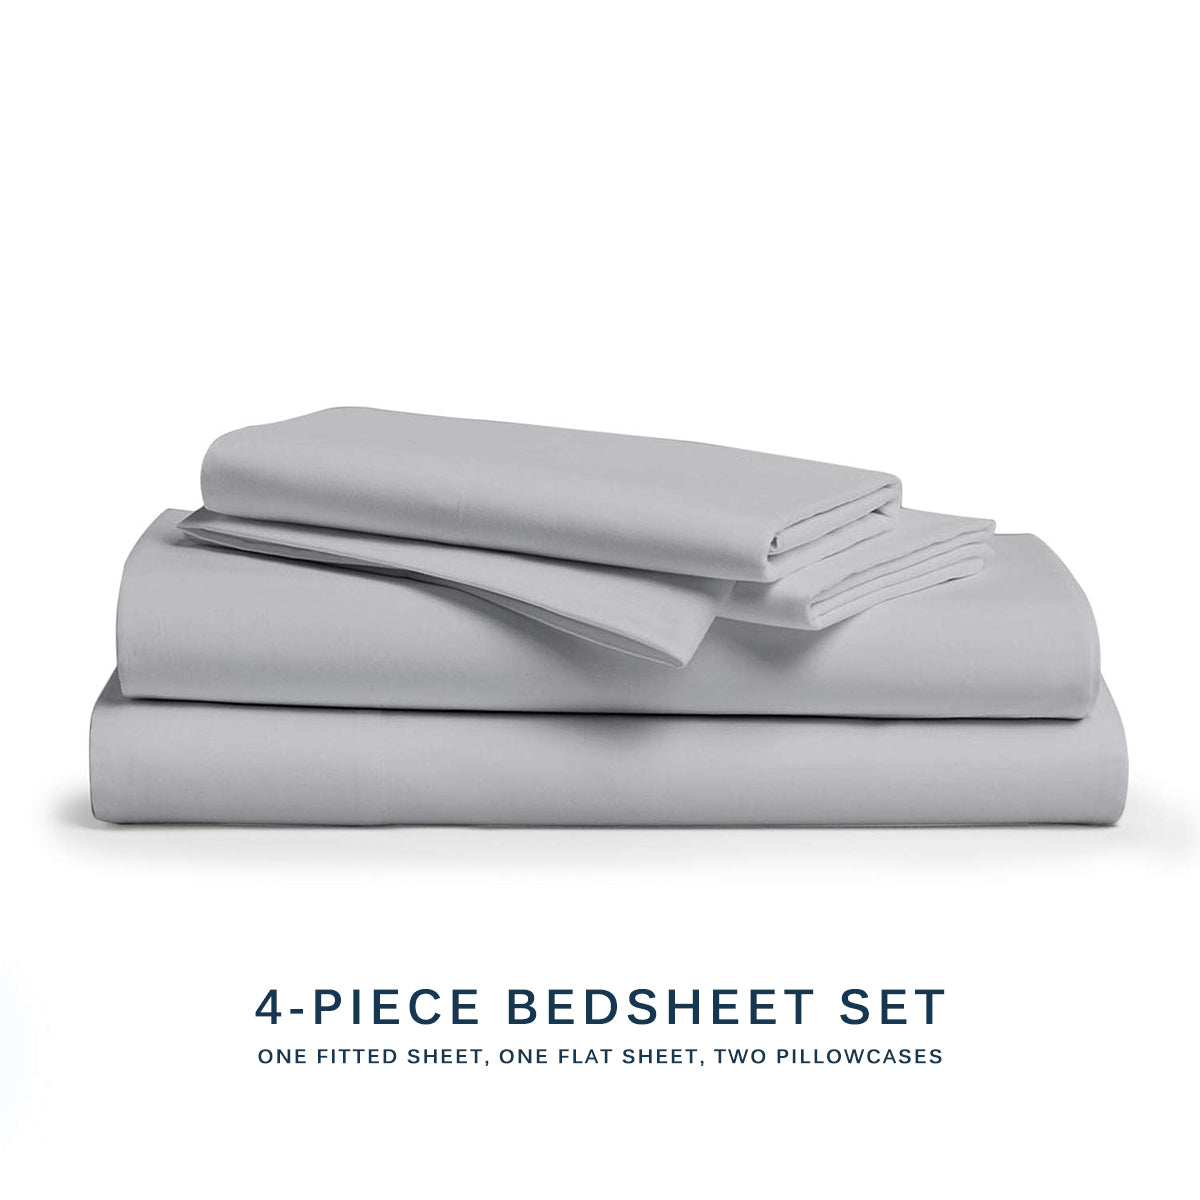 Mali Dreaming Casa Microfiber Bed Sheet 4-Piece Bedding Set - Queen Size, Gray